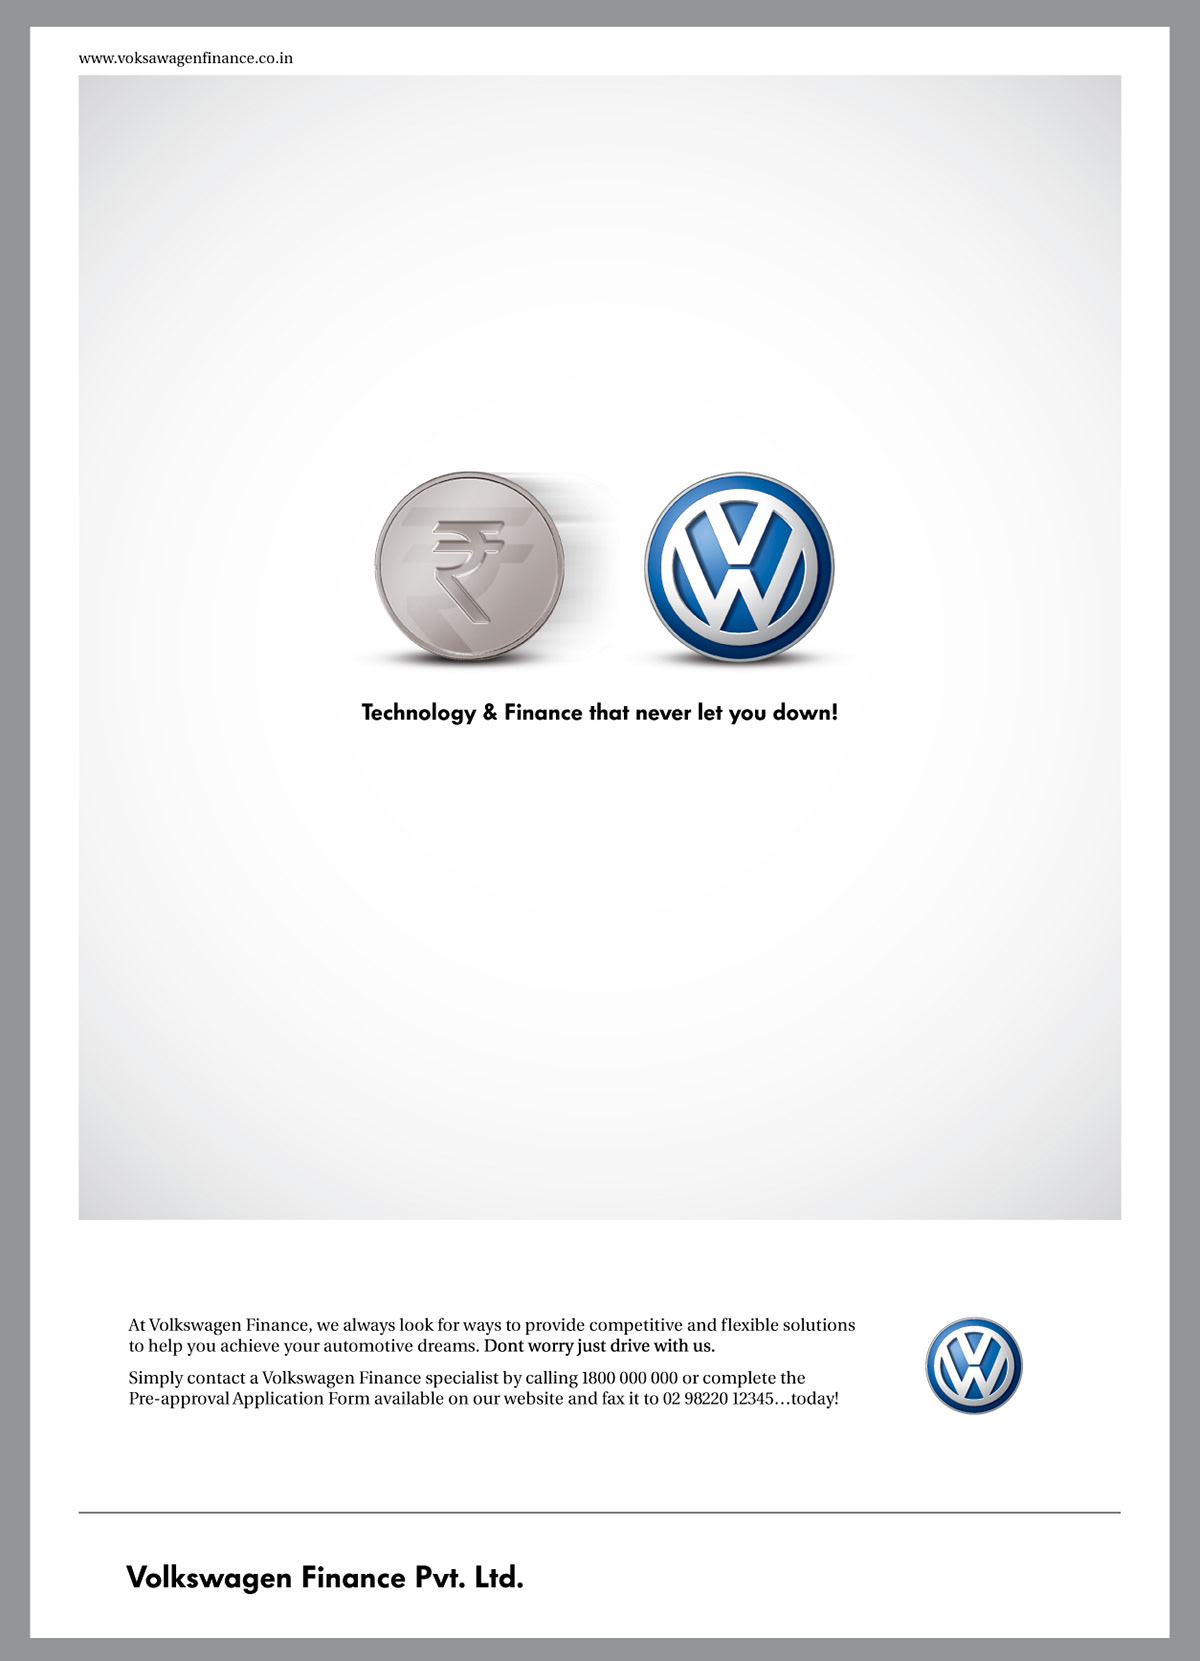 VW Fianance